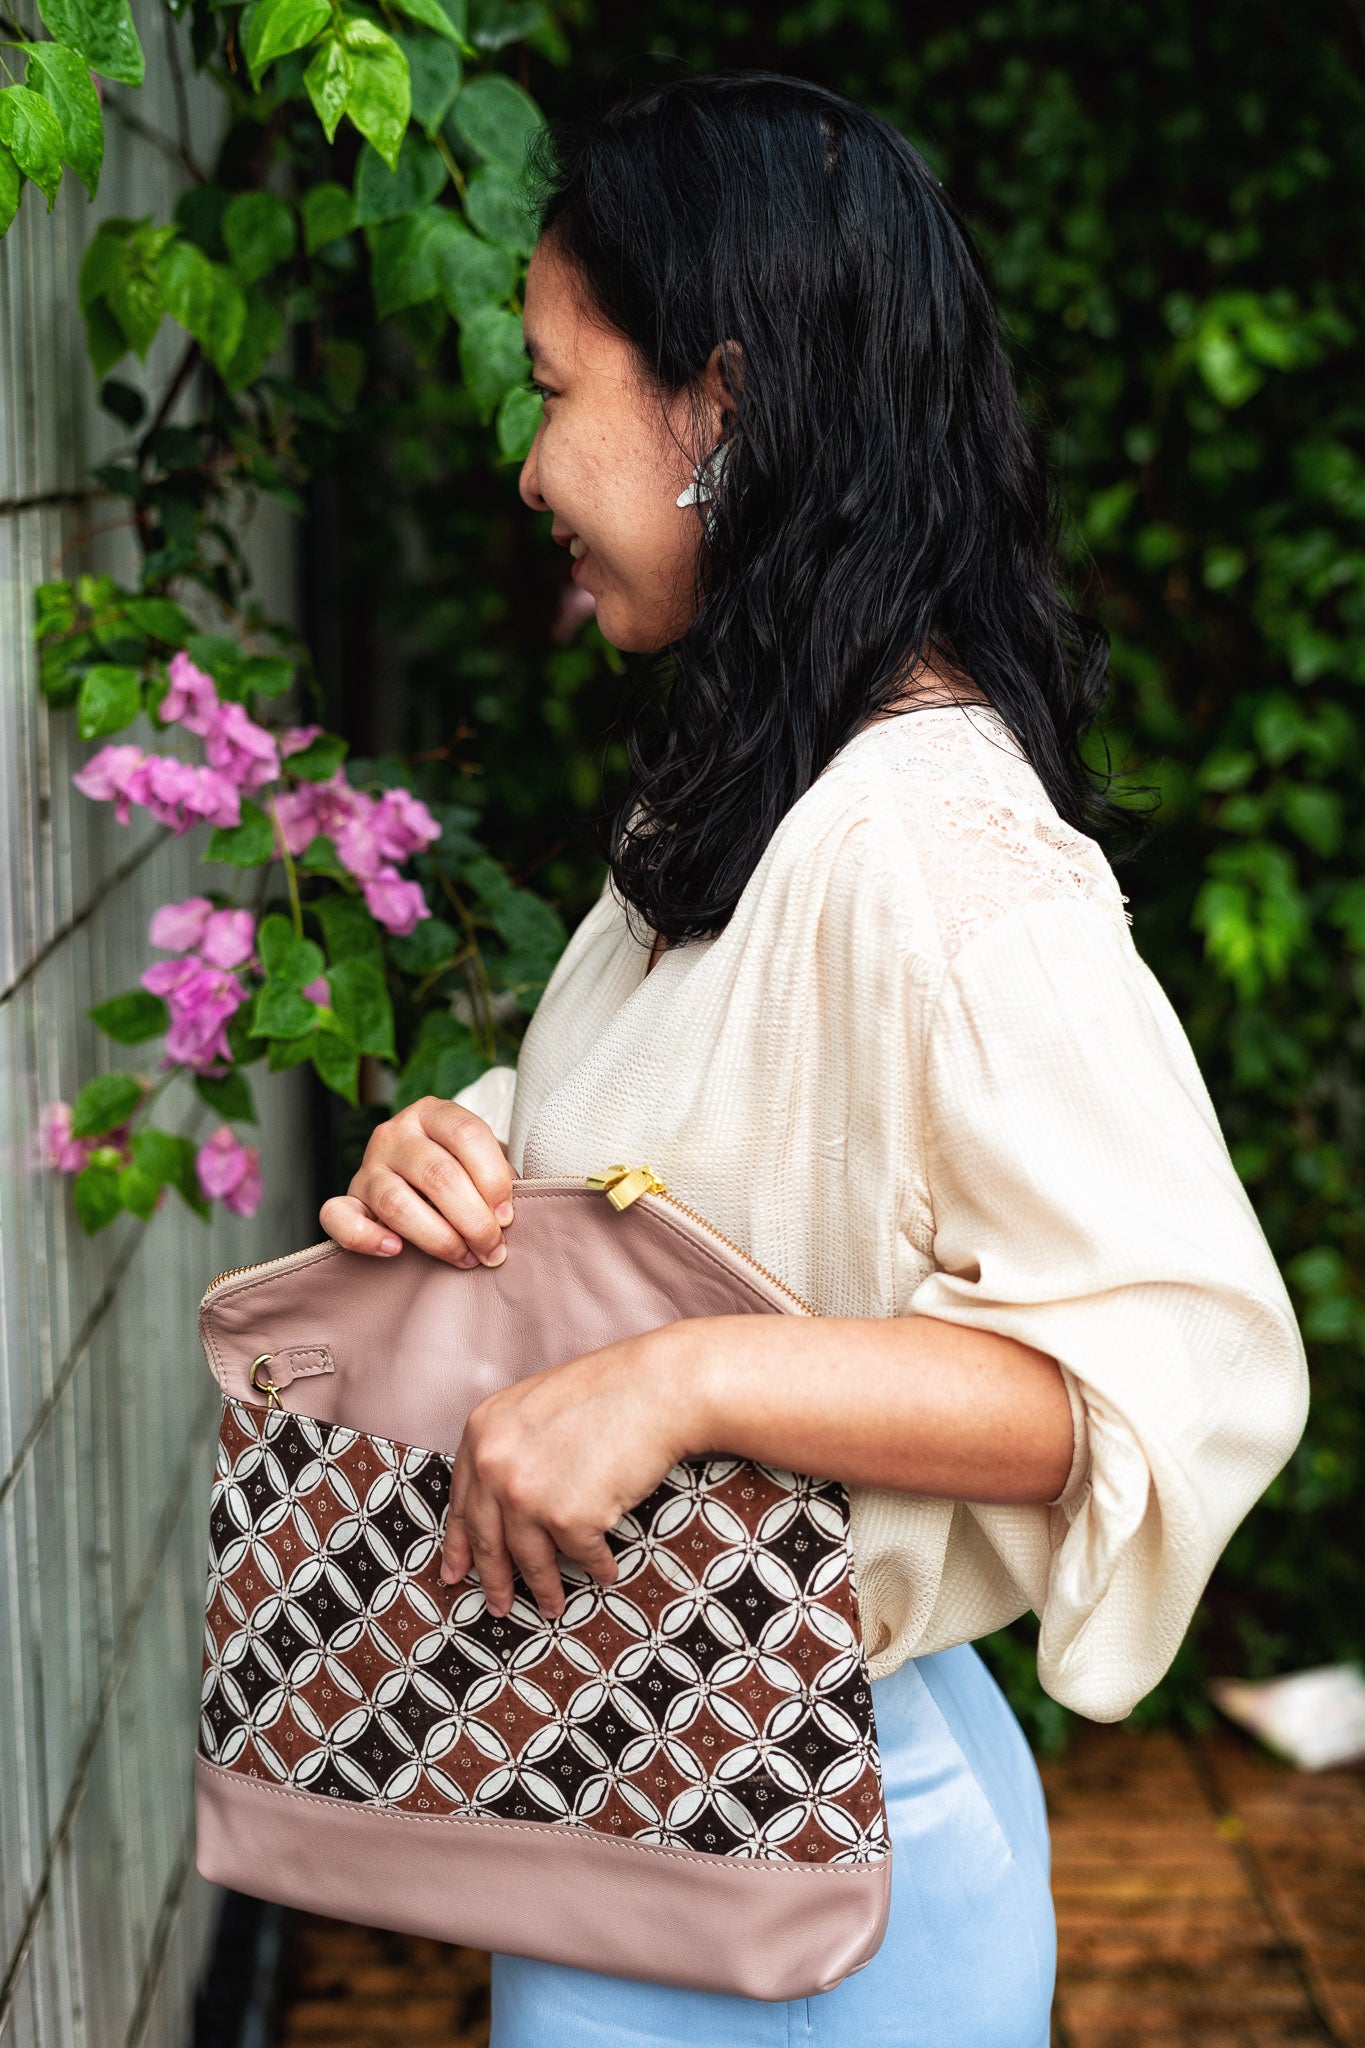 Batik Irama Classy Shoulder Bag from Singapore ethical designer Gypsied